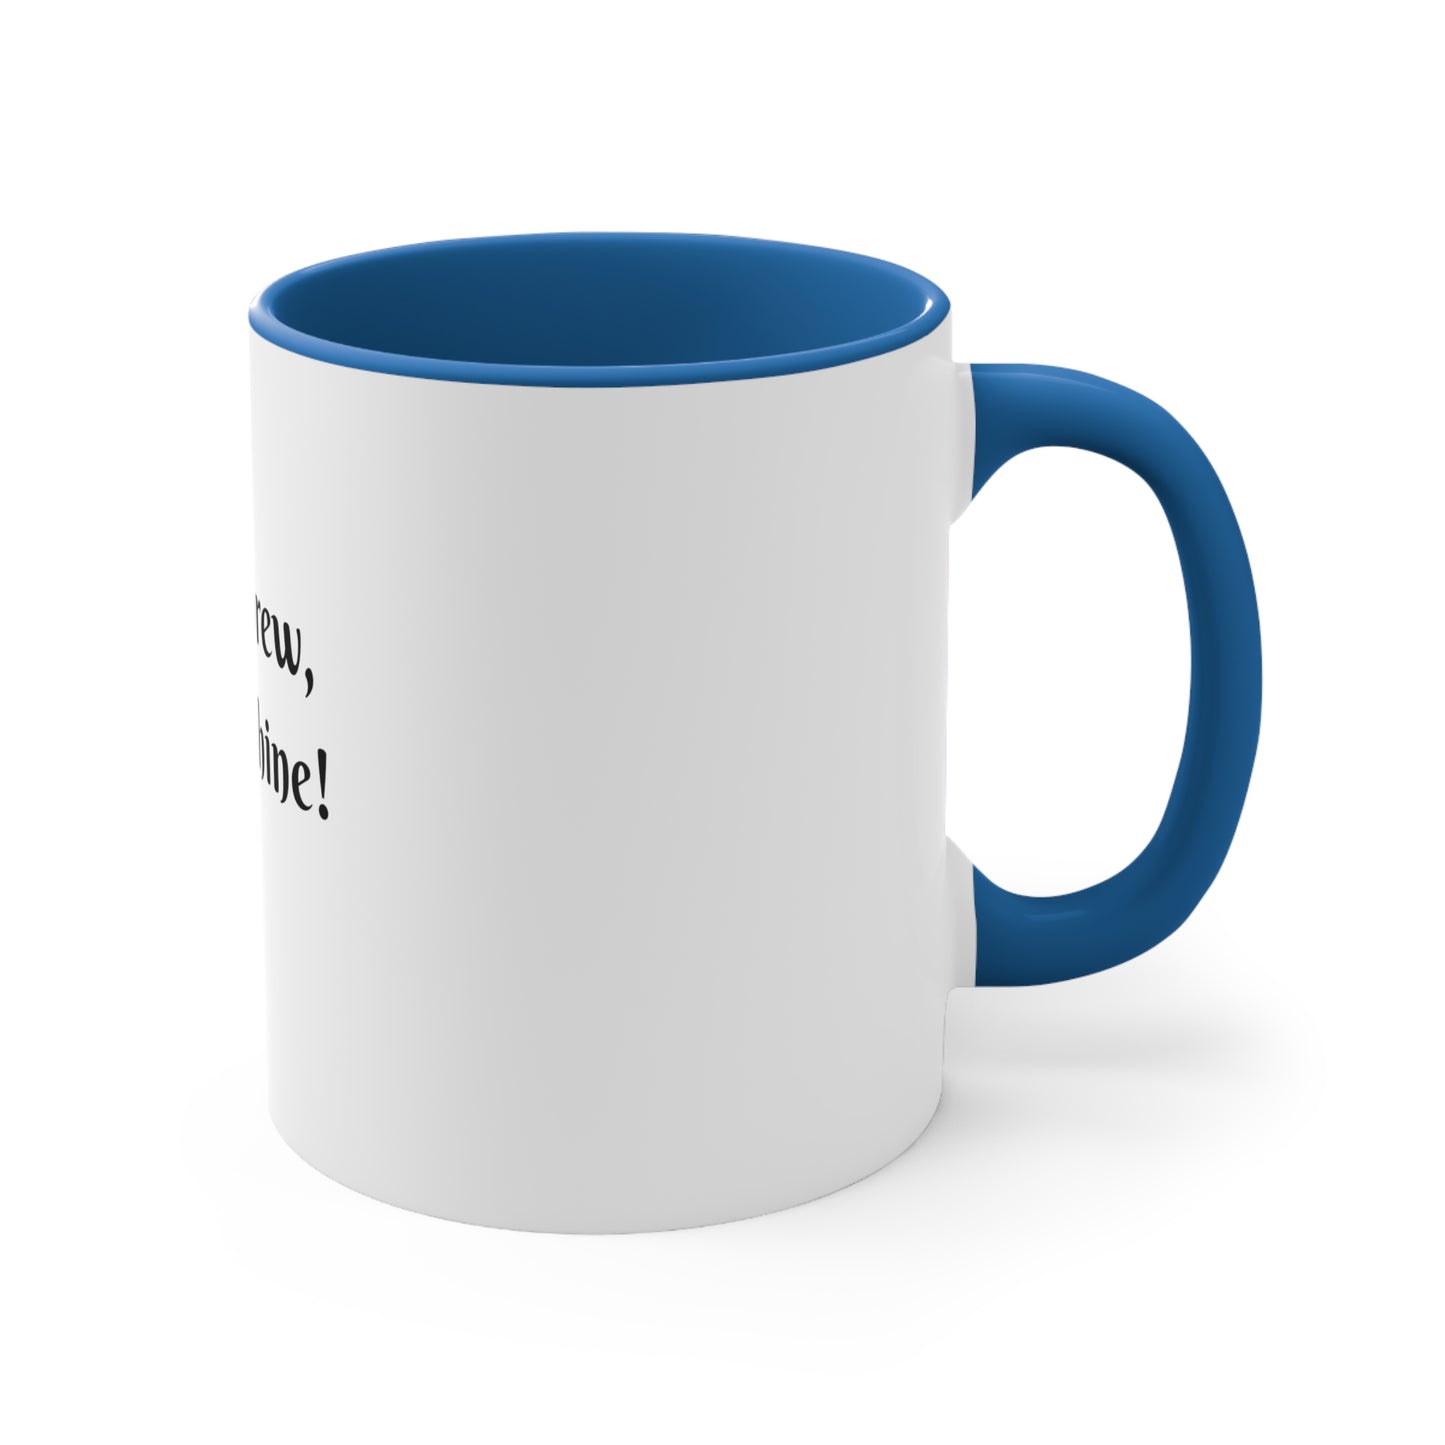 Accent Coffee Mug, 11oz. Free Shipping